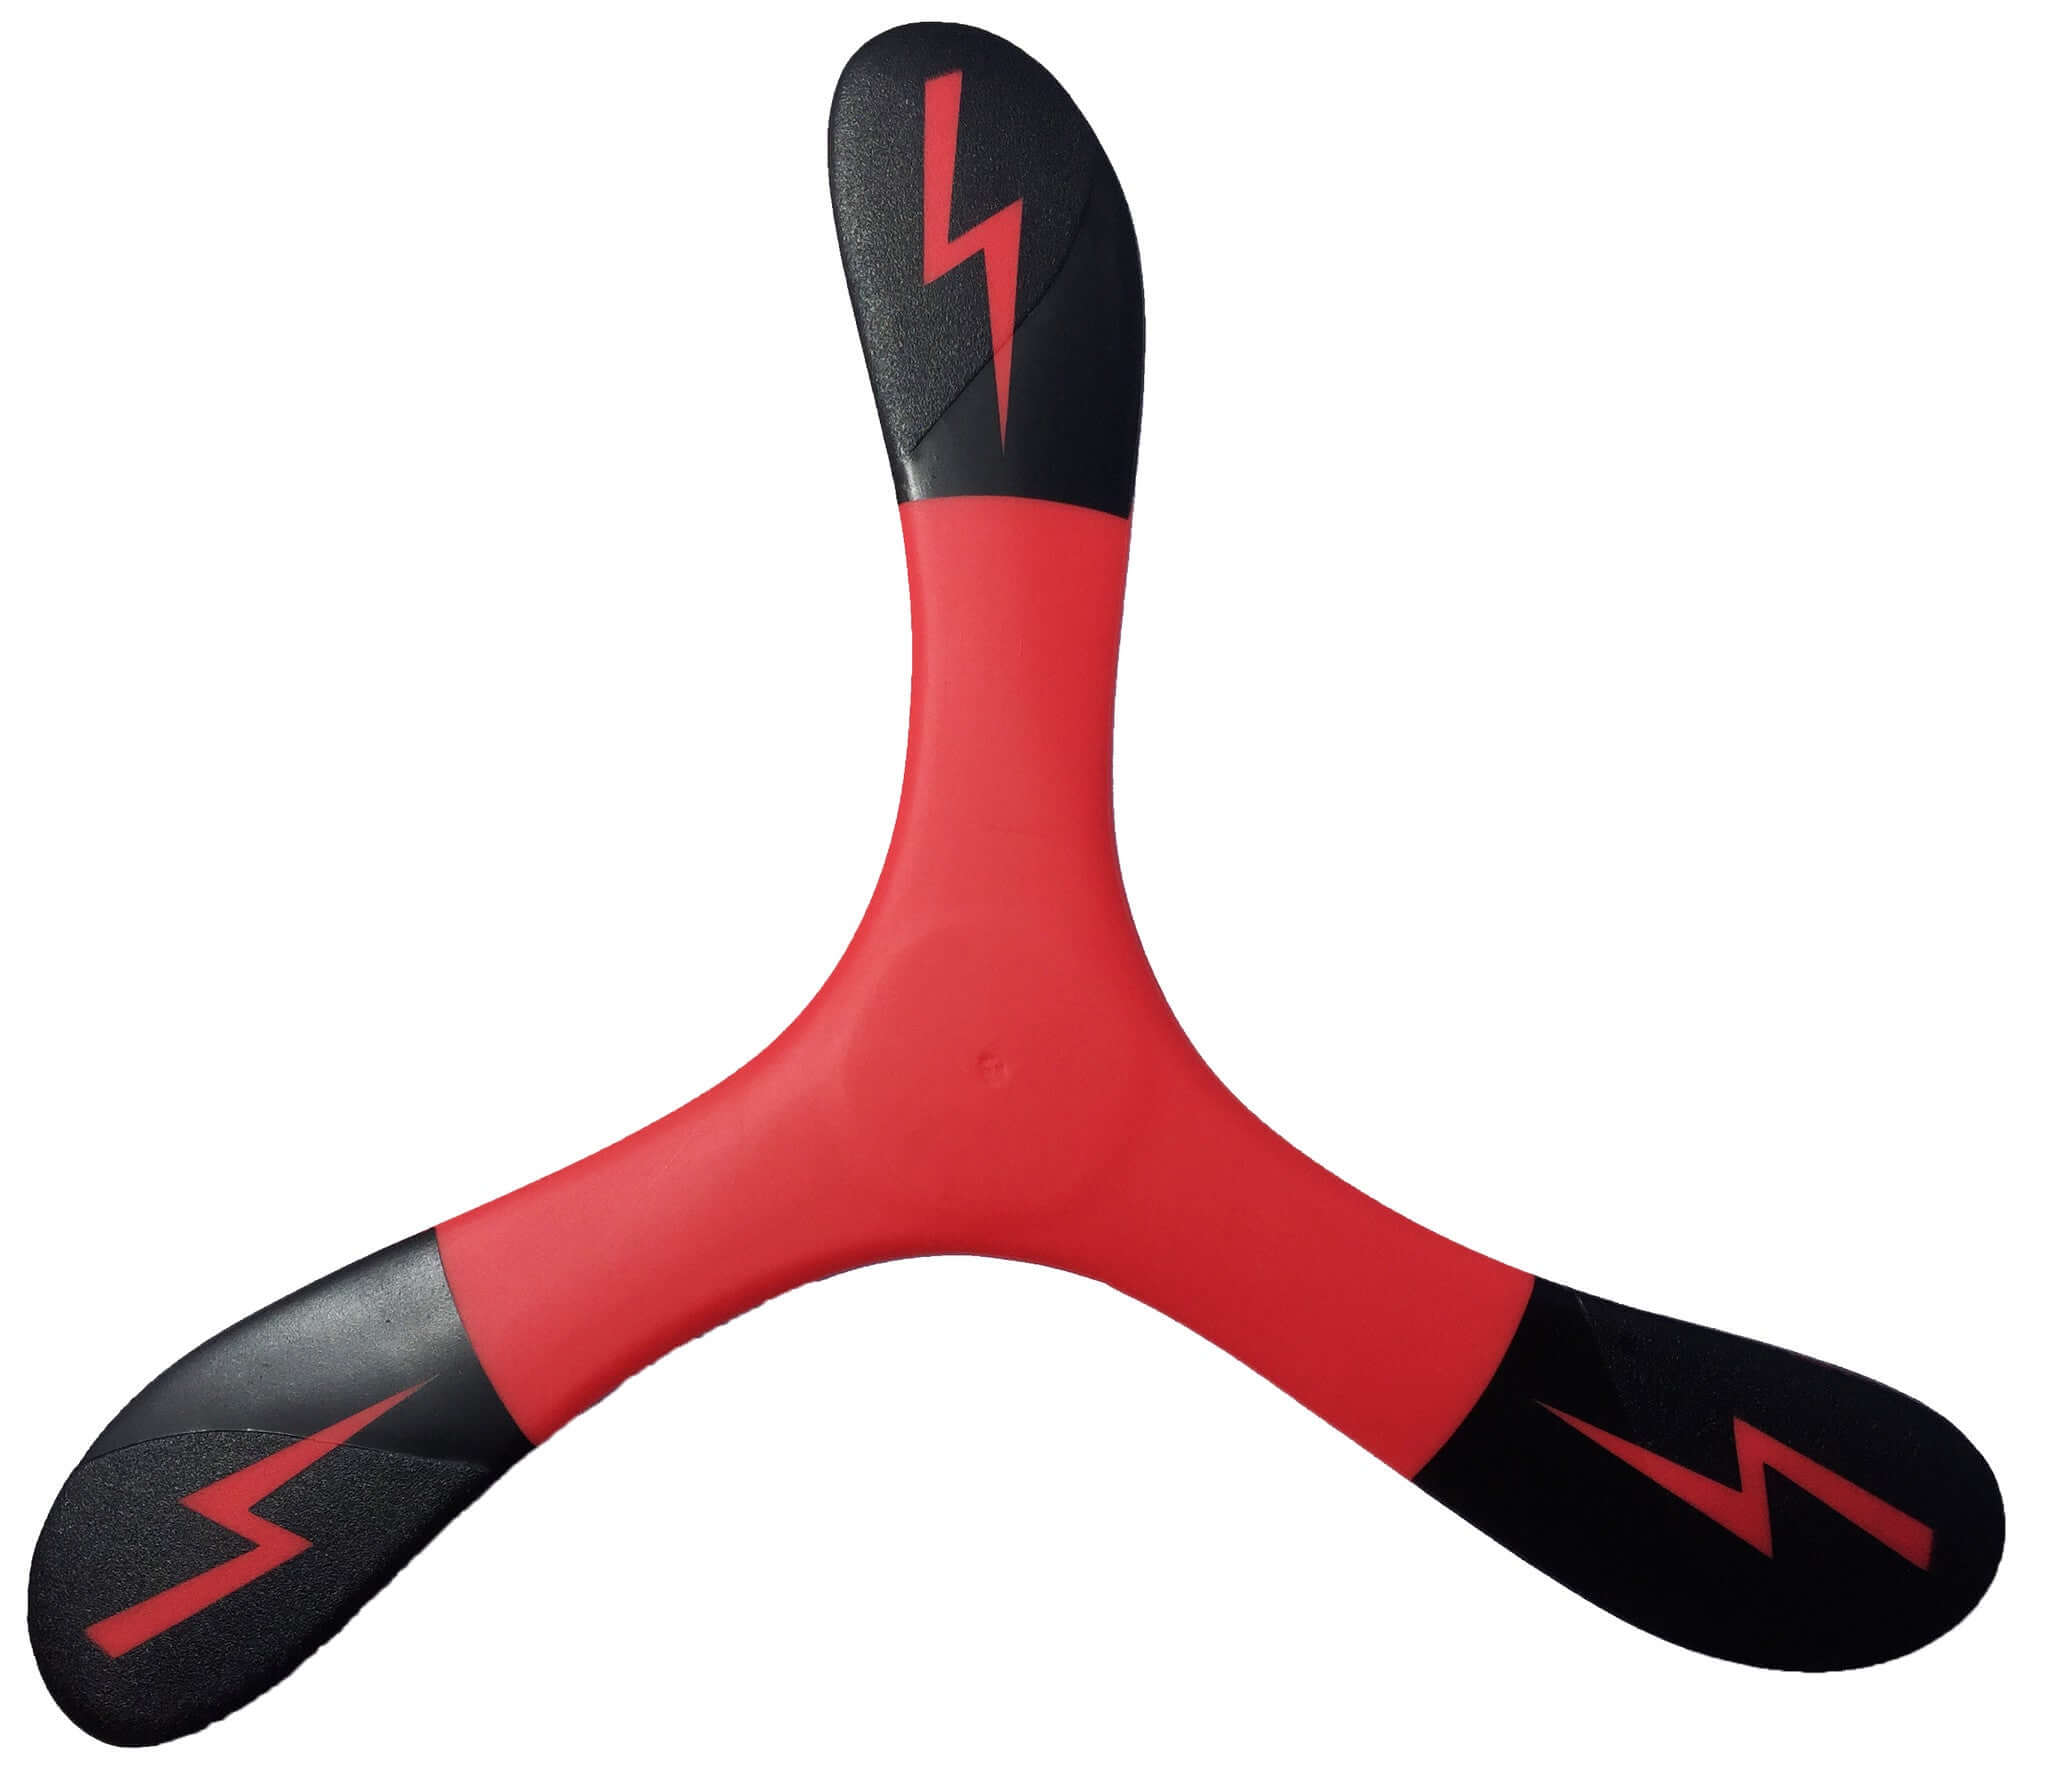 Boomerang, Ancient Weaponry & Modern Sport